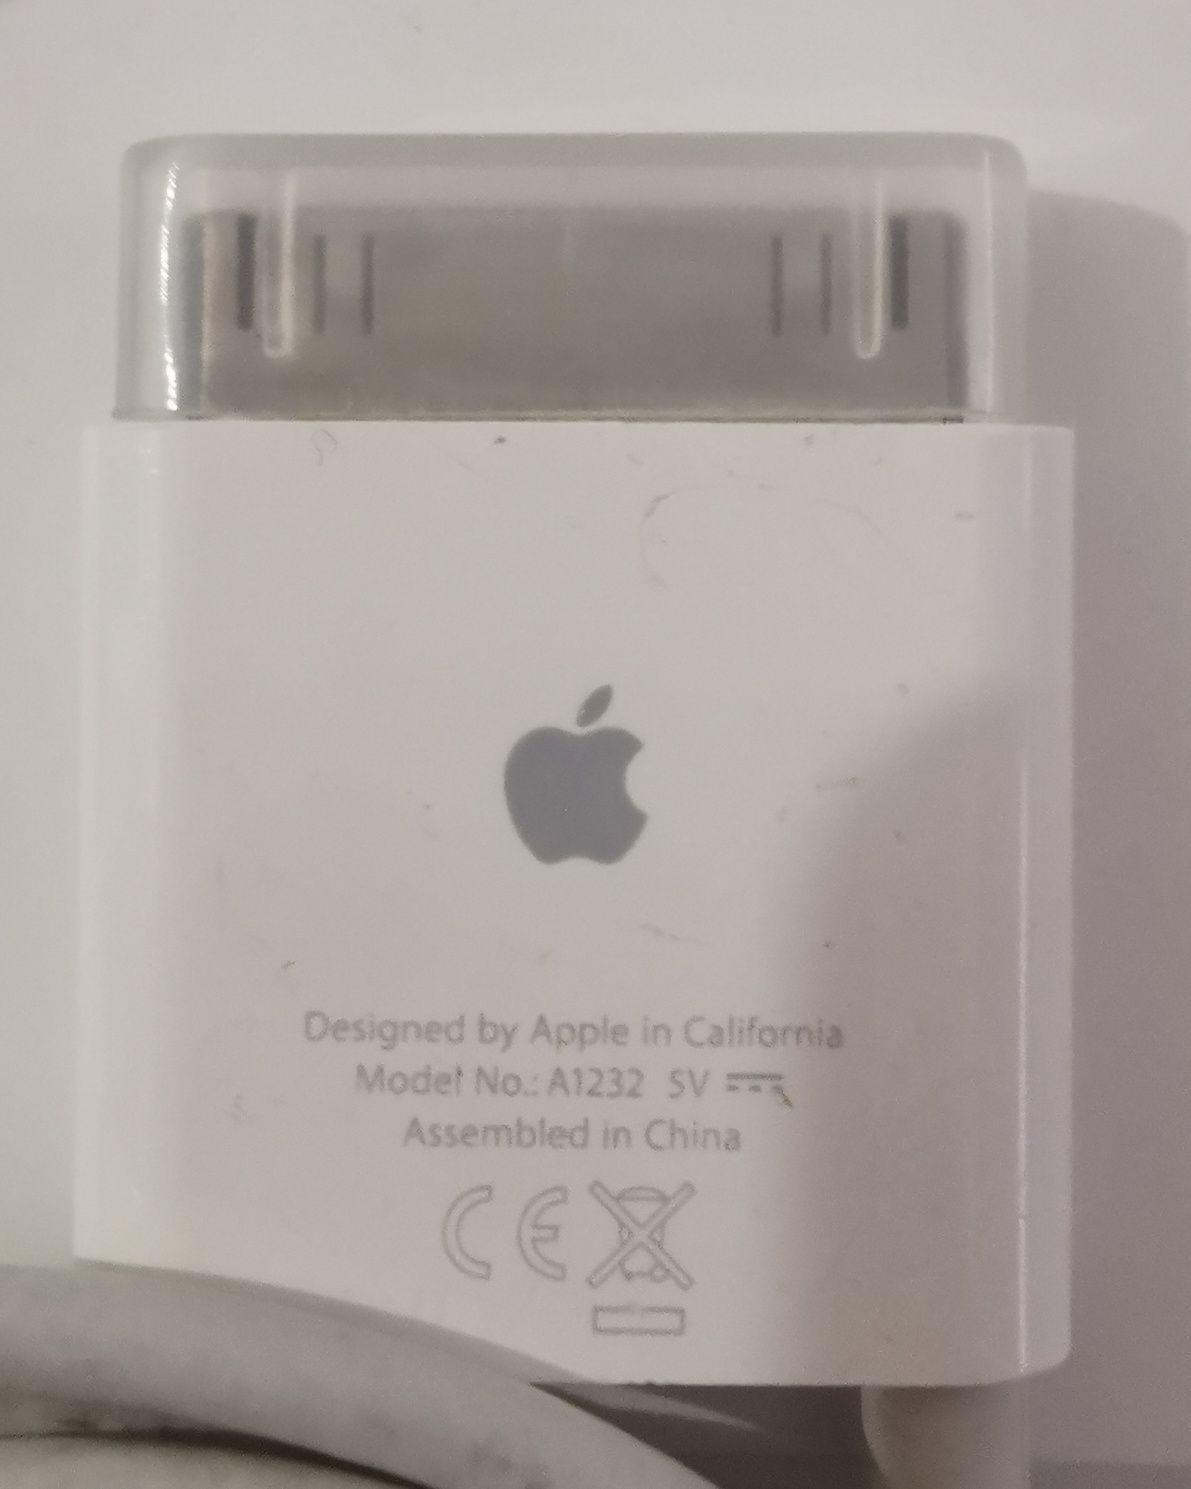 Apple A1221 Bluetooth Headset e iPhone 2g